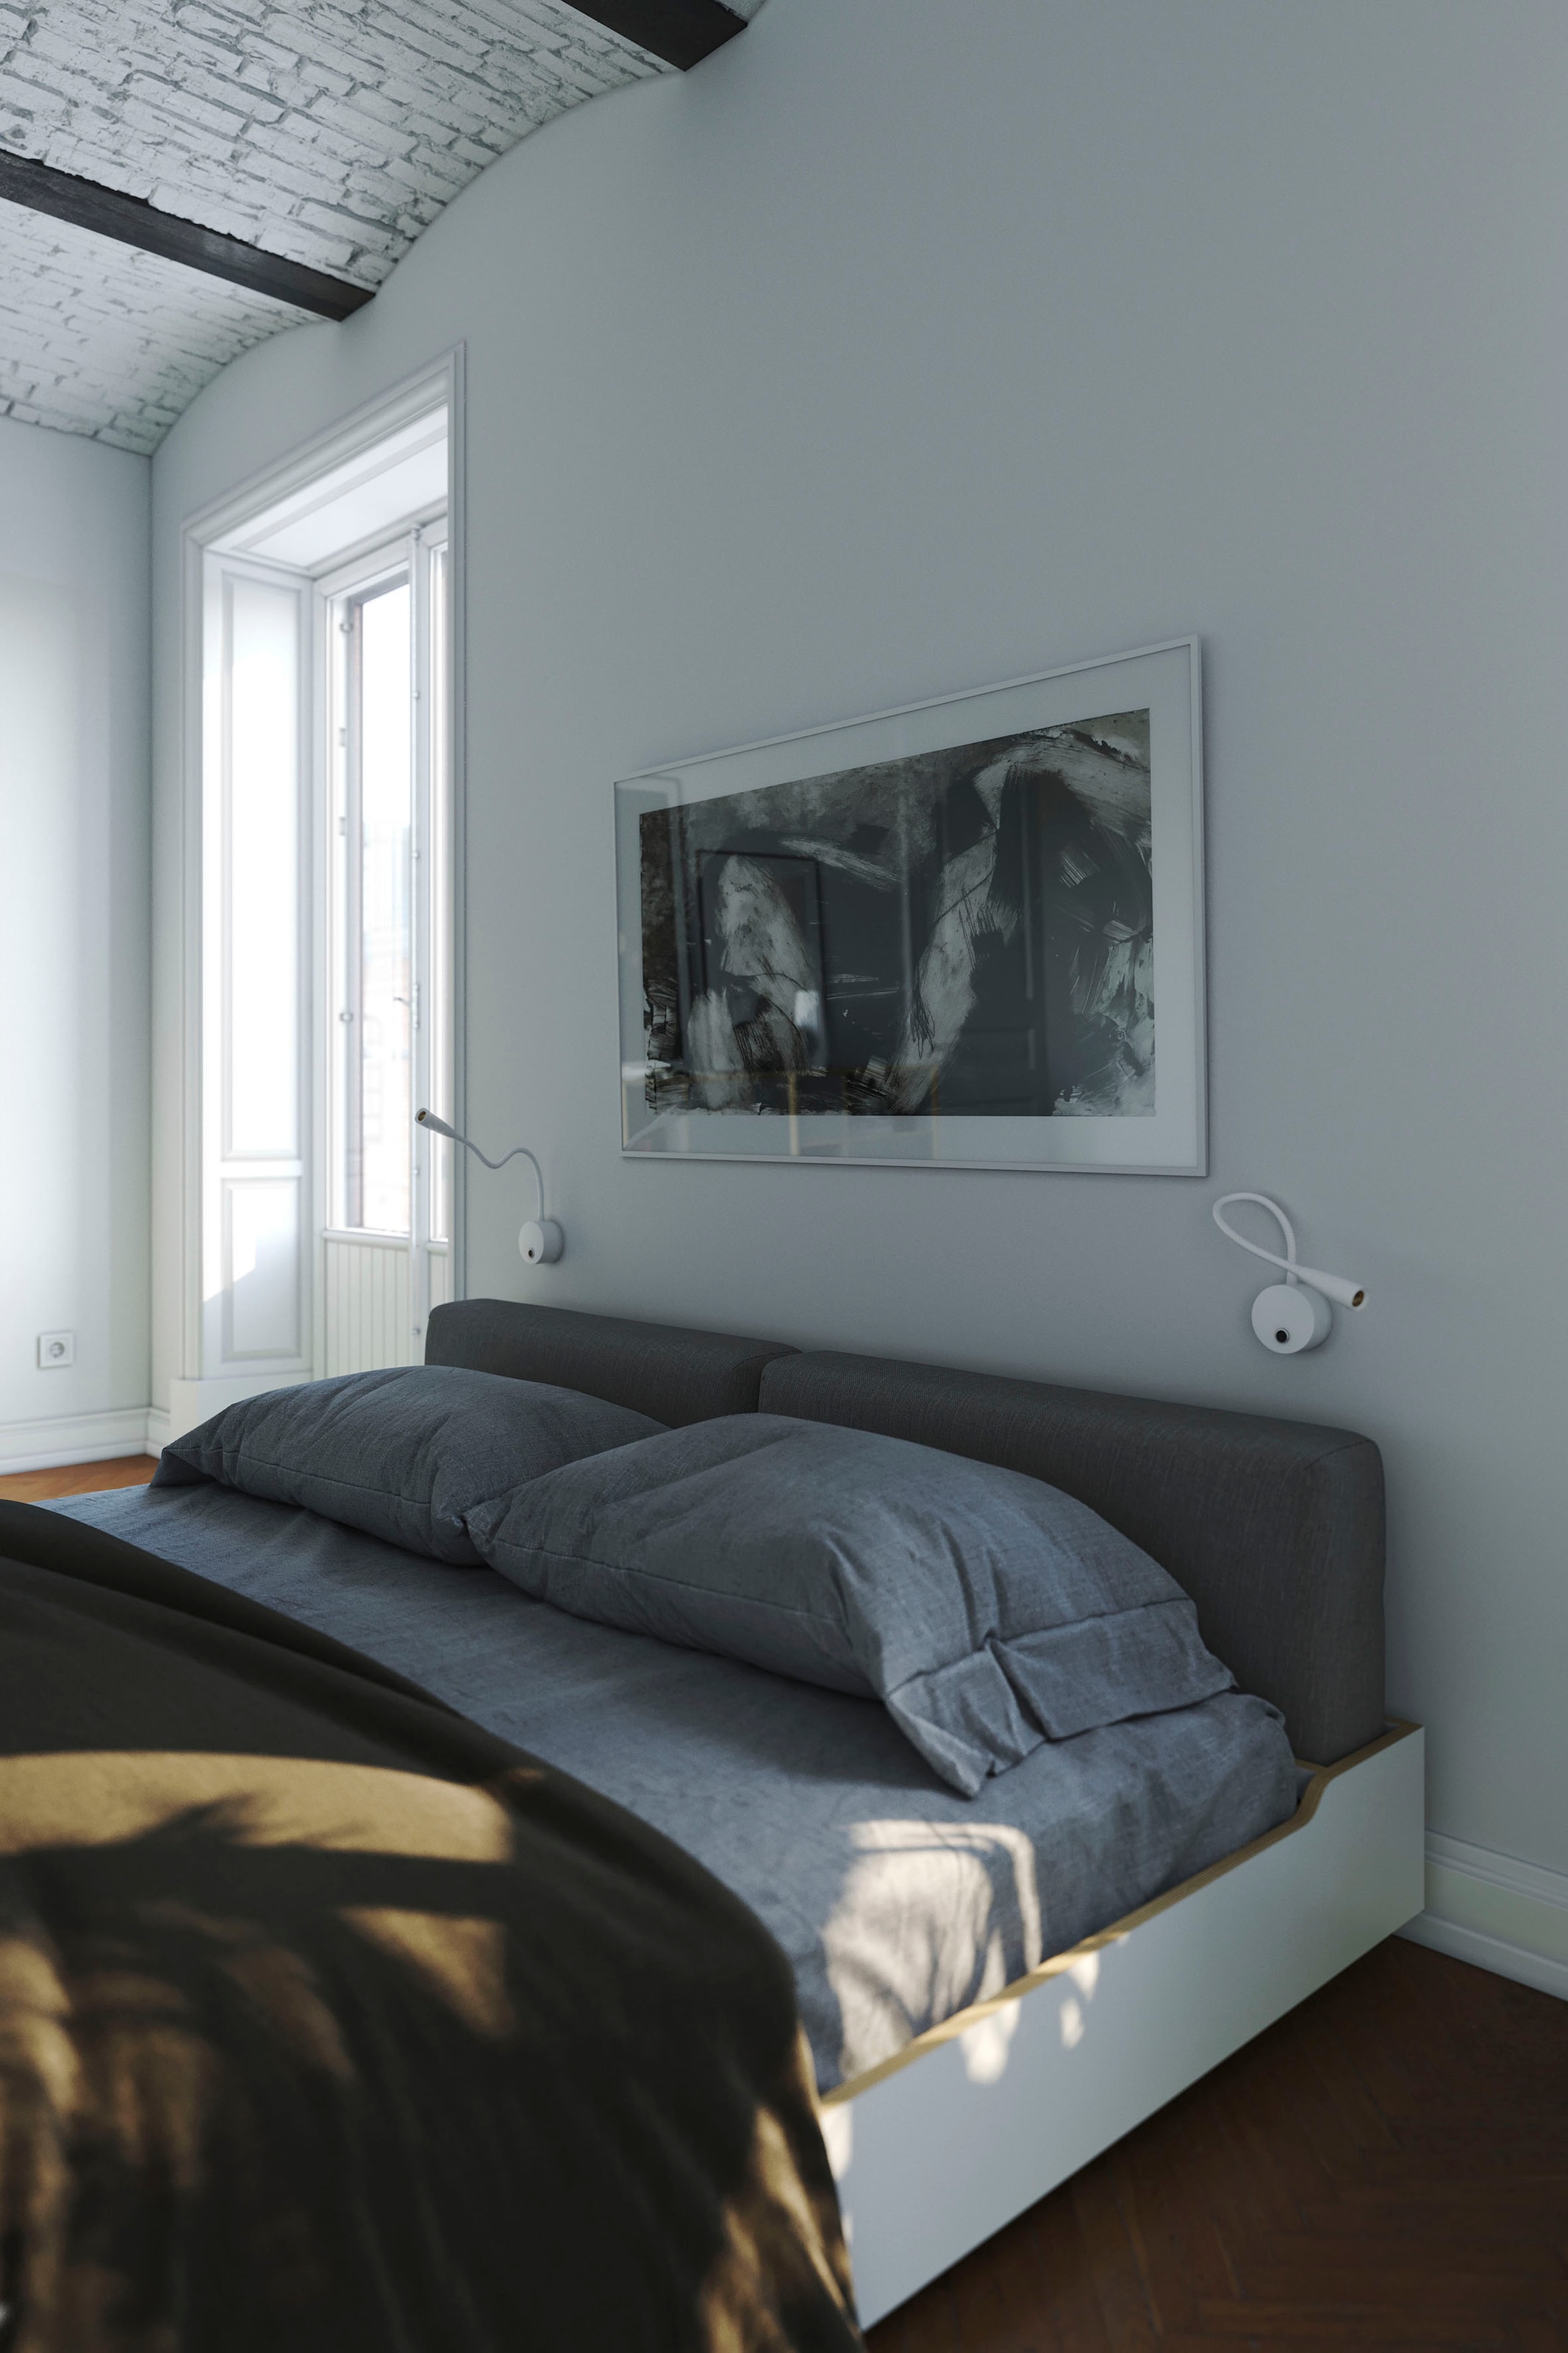 Müller SMALL LIVING Futonbett »MAUDE Bett«, Überlänge 220 cm